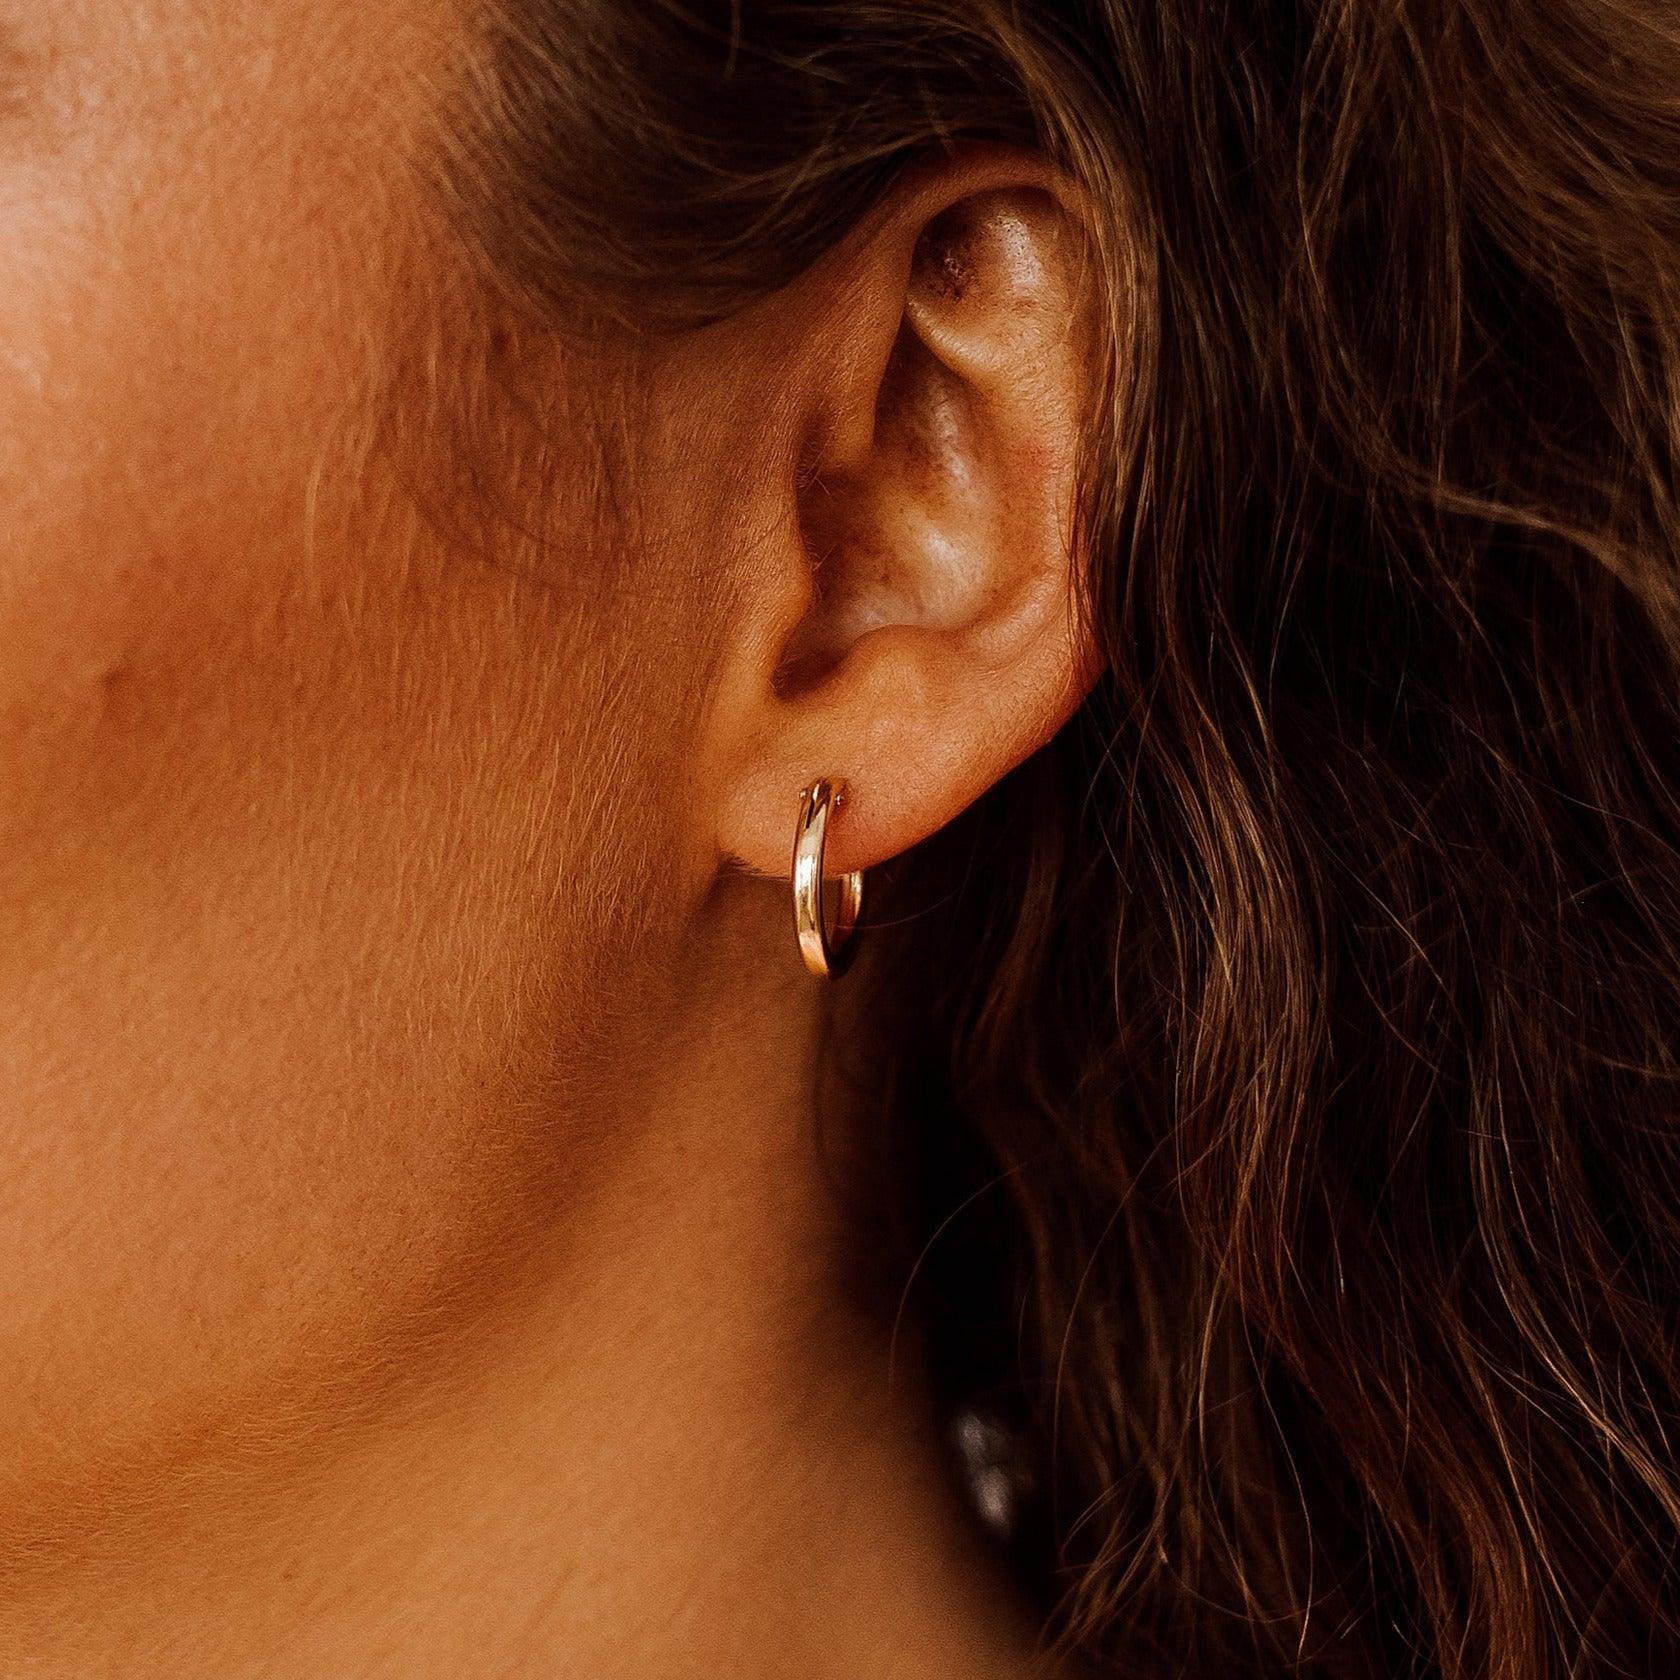 Jane Hoop Earrings - Nolia Jewelry - Meaningful + Sustainably Handcrafted Jewelry